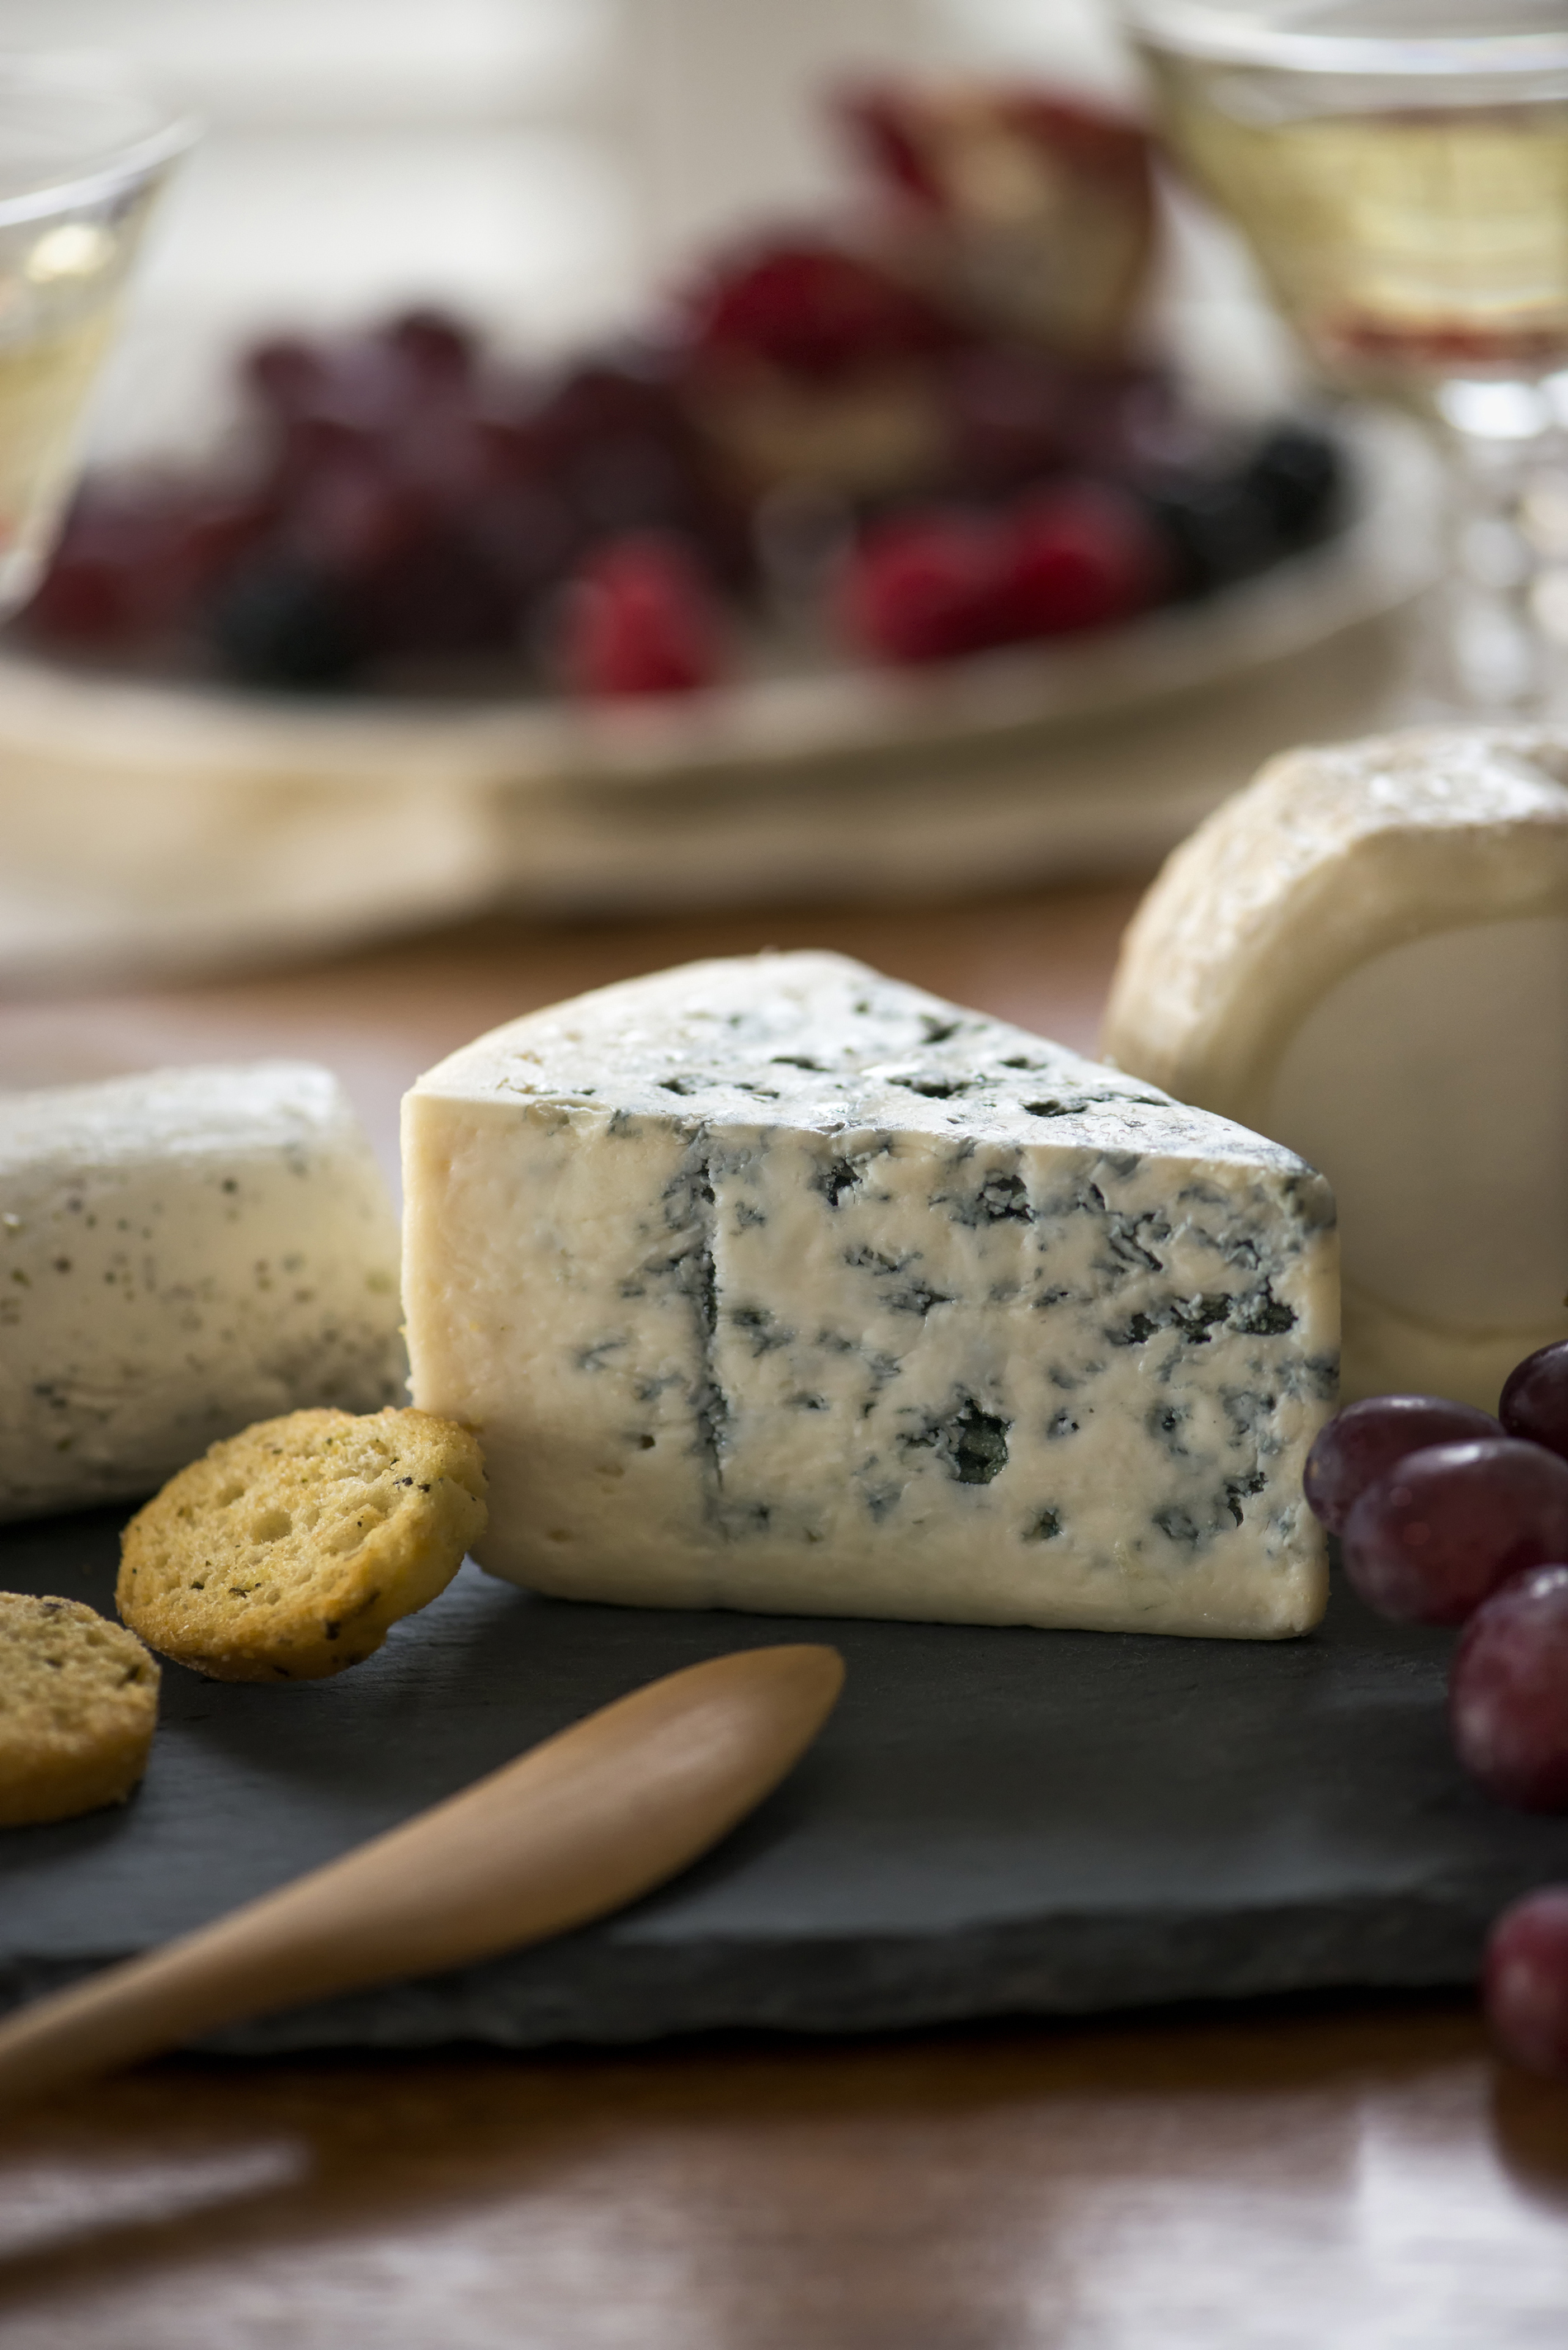 Vente en ligne de Roquefort, fromage bleu de Brebis.